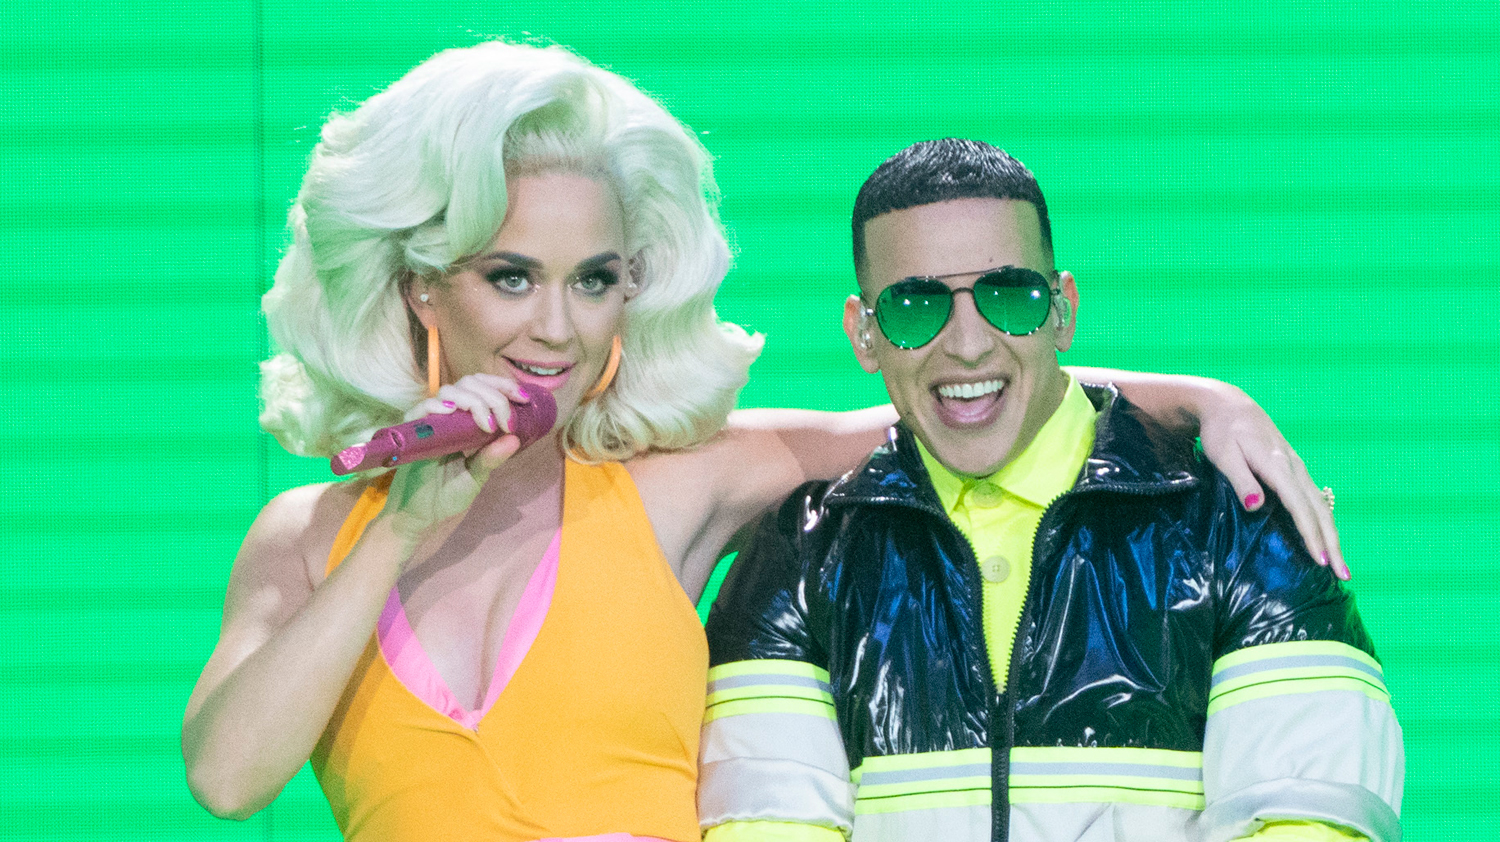 Katy Perry Daddy Yankee Perform Con Calma On American Idol